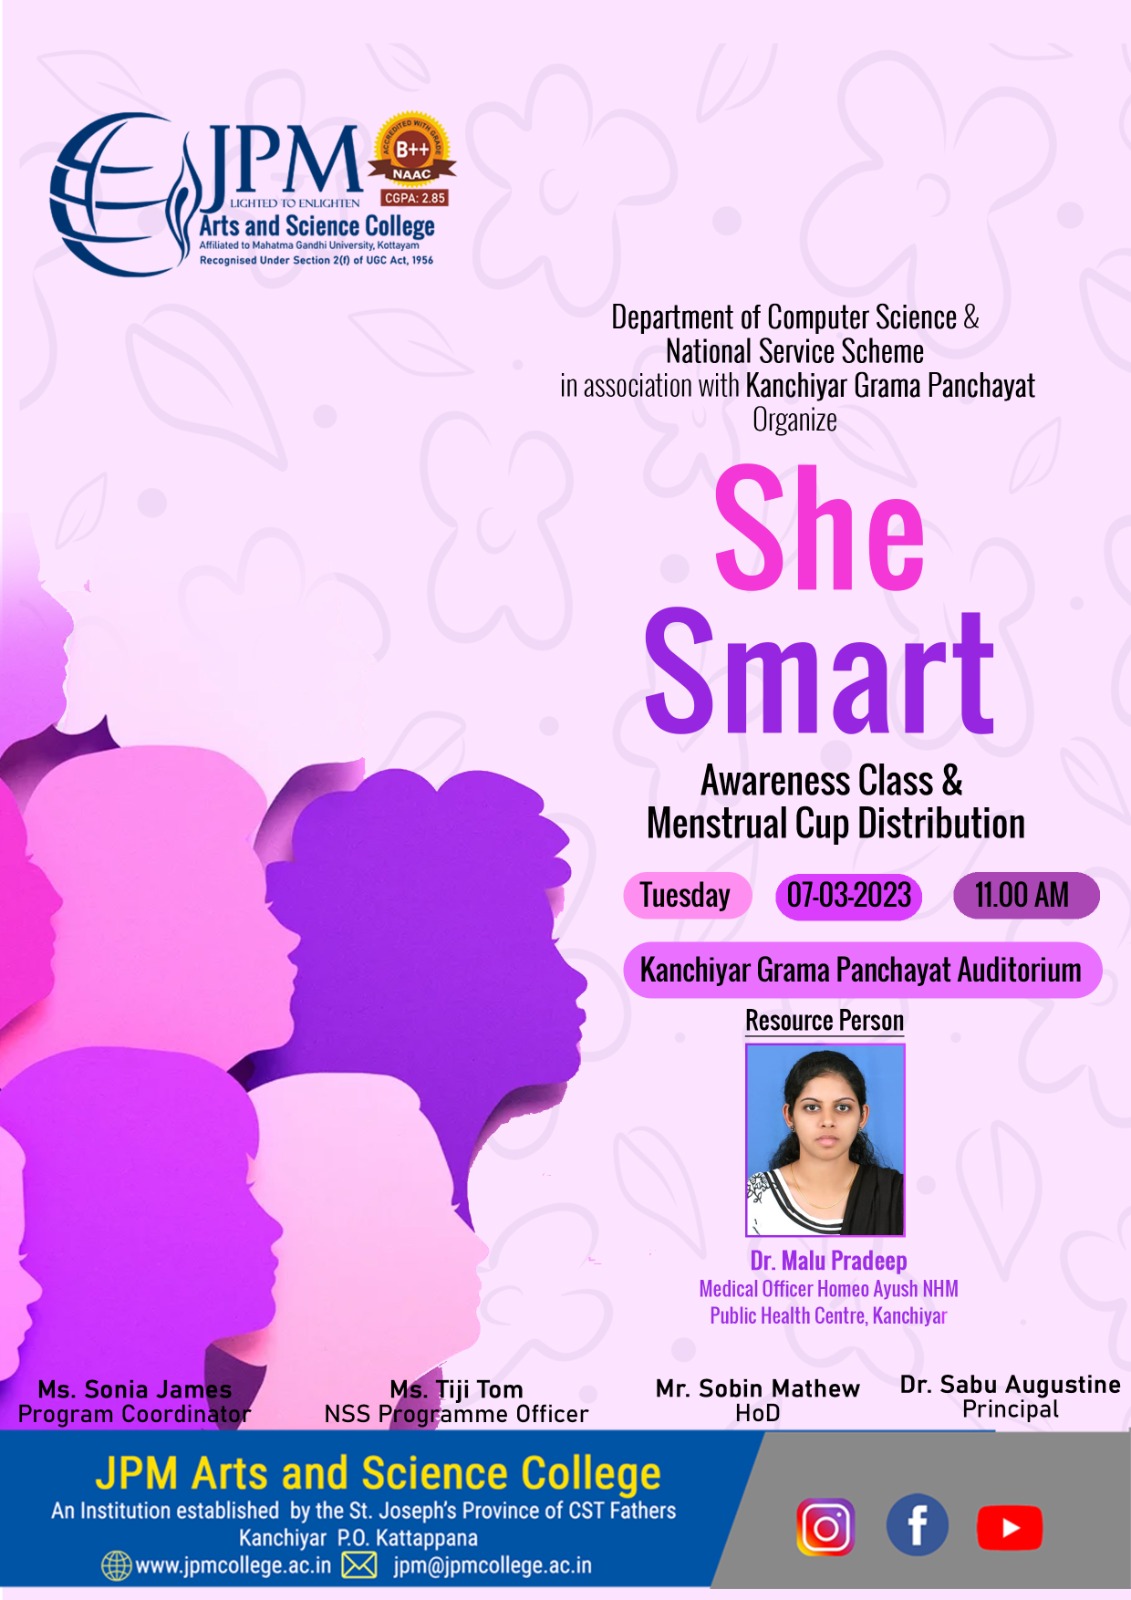 She Smart - Awareness Class & Menstrual Cup Distribution